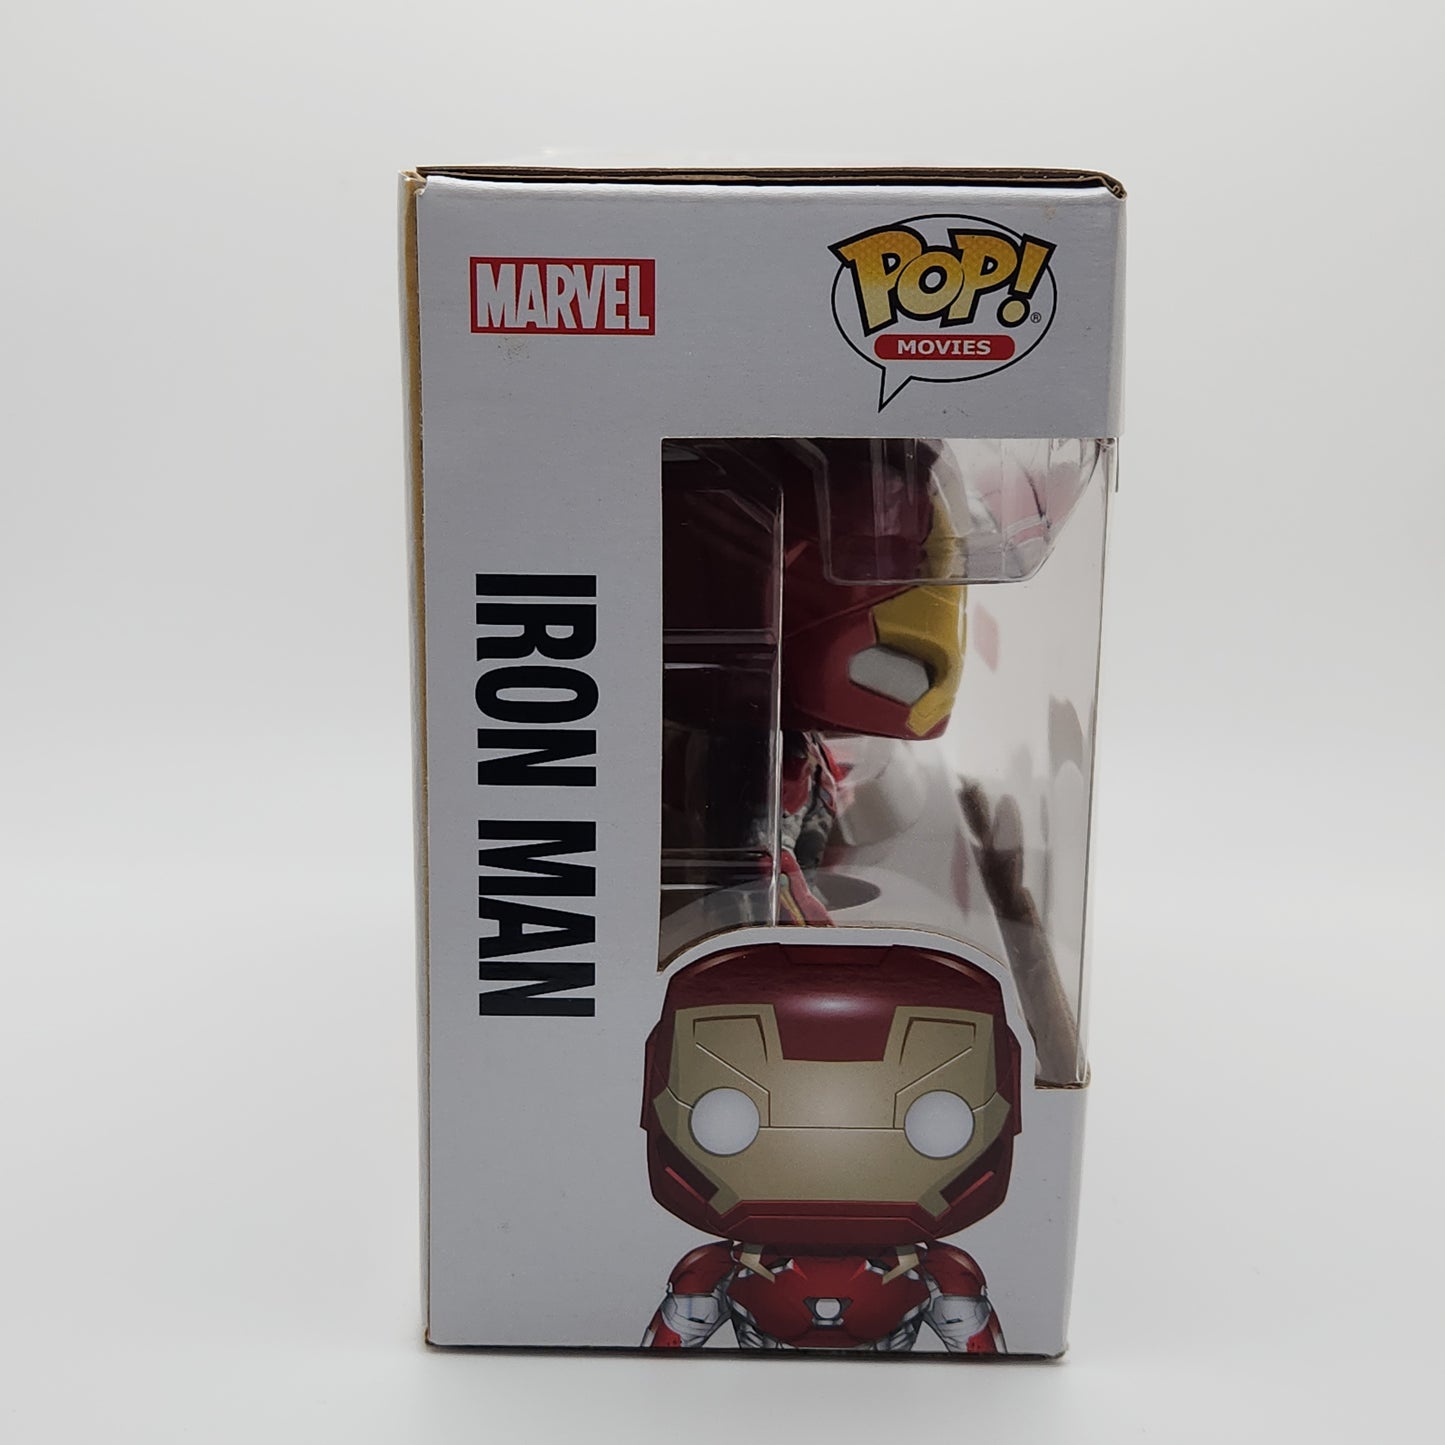 Funko Pop! Marvel- Spider-Man Homecoming: Iron Man & Spider-Man (2pk)